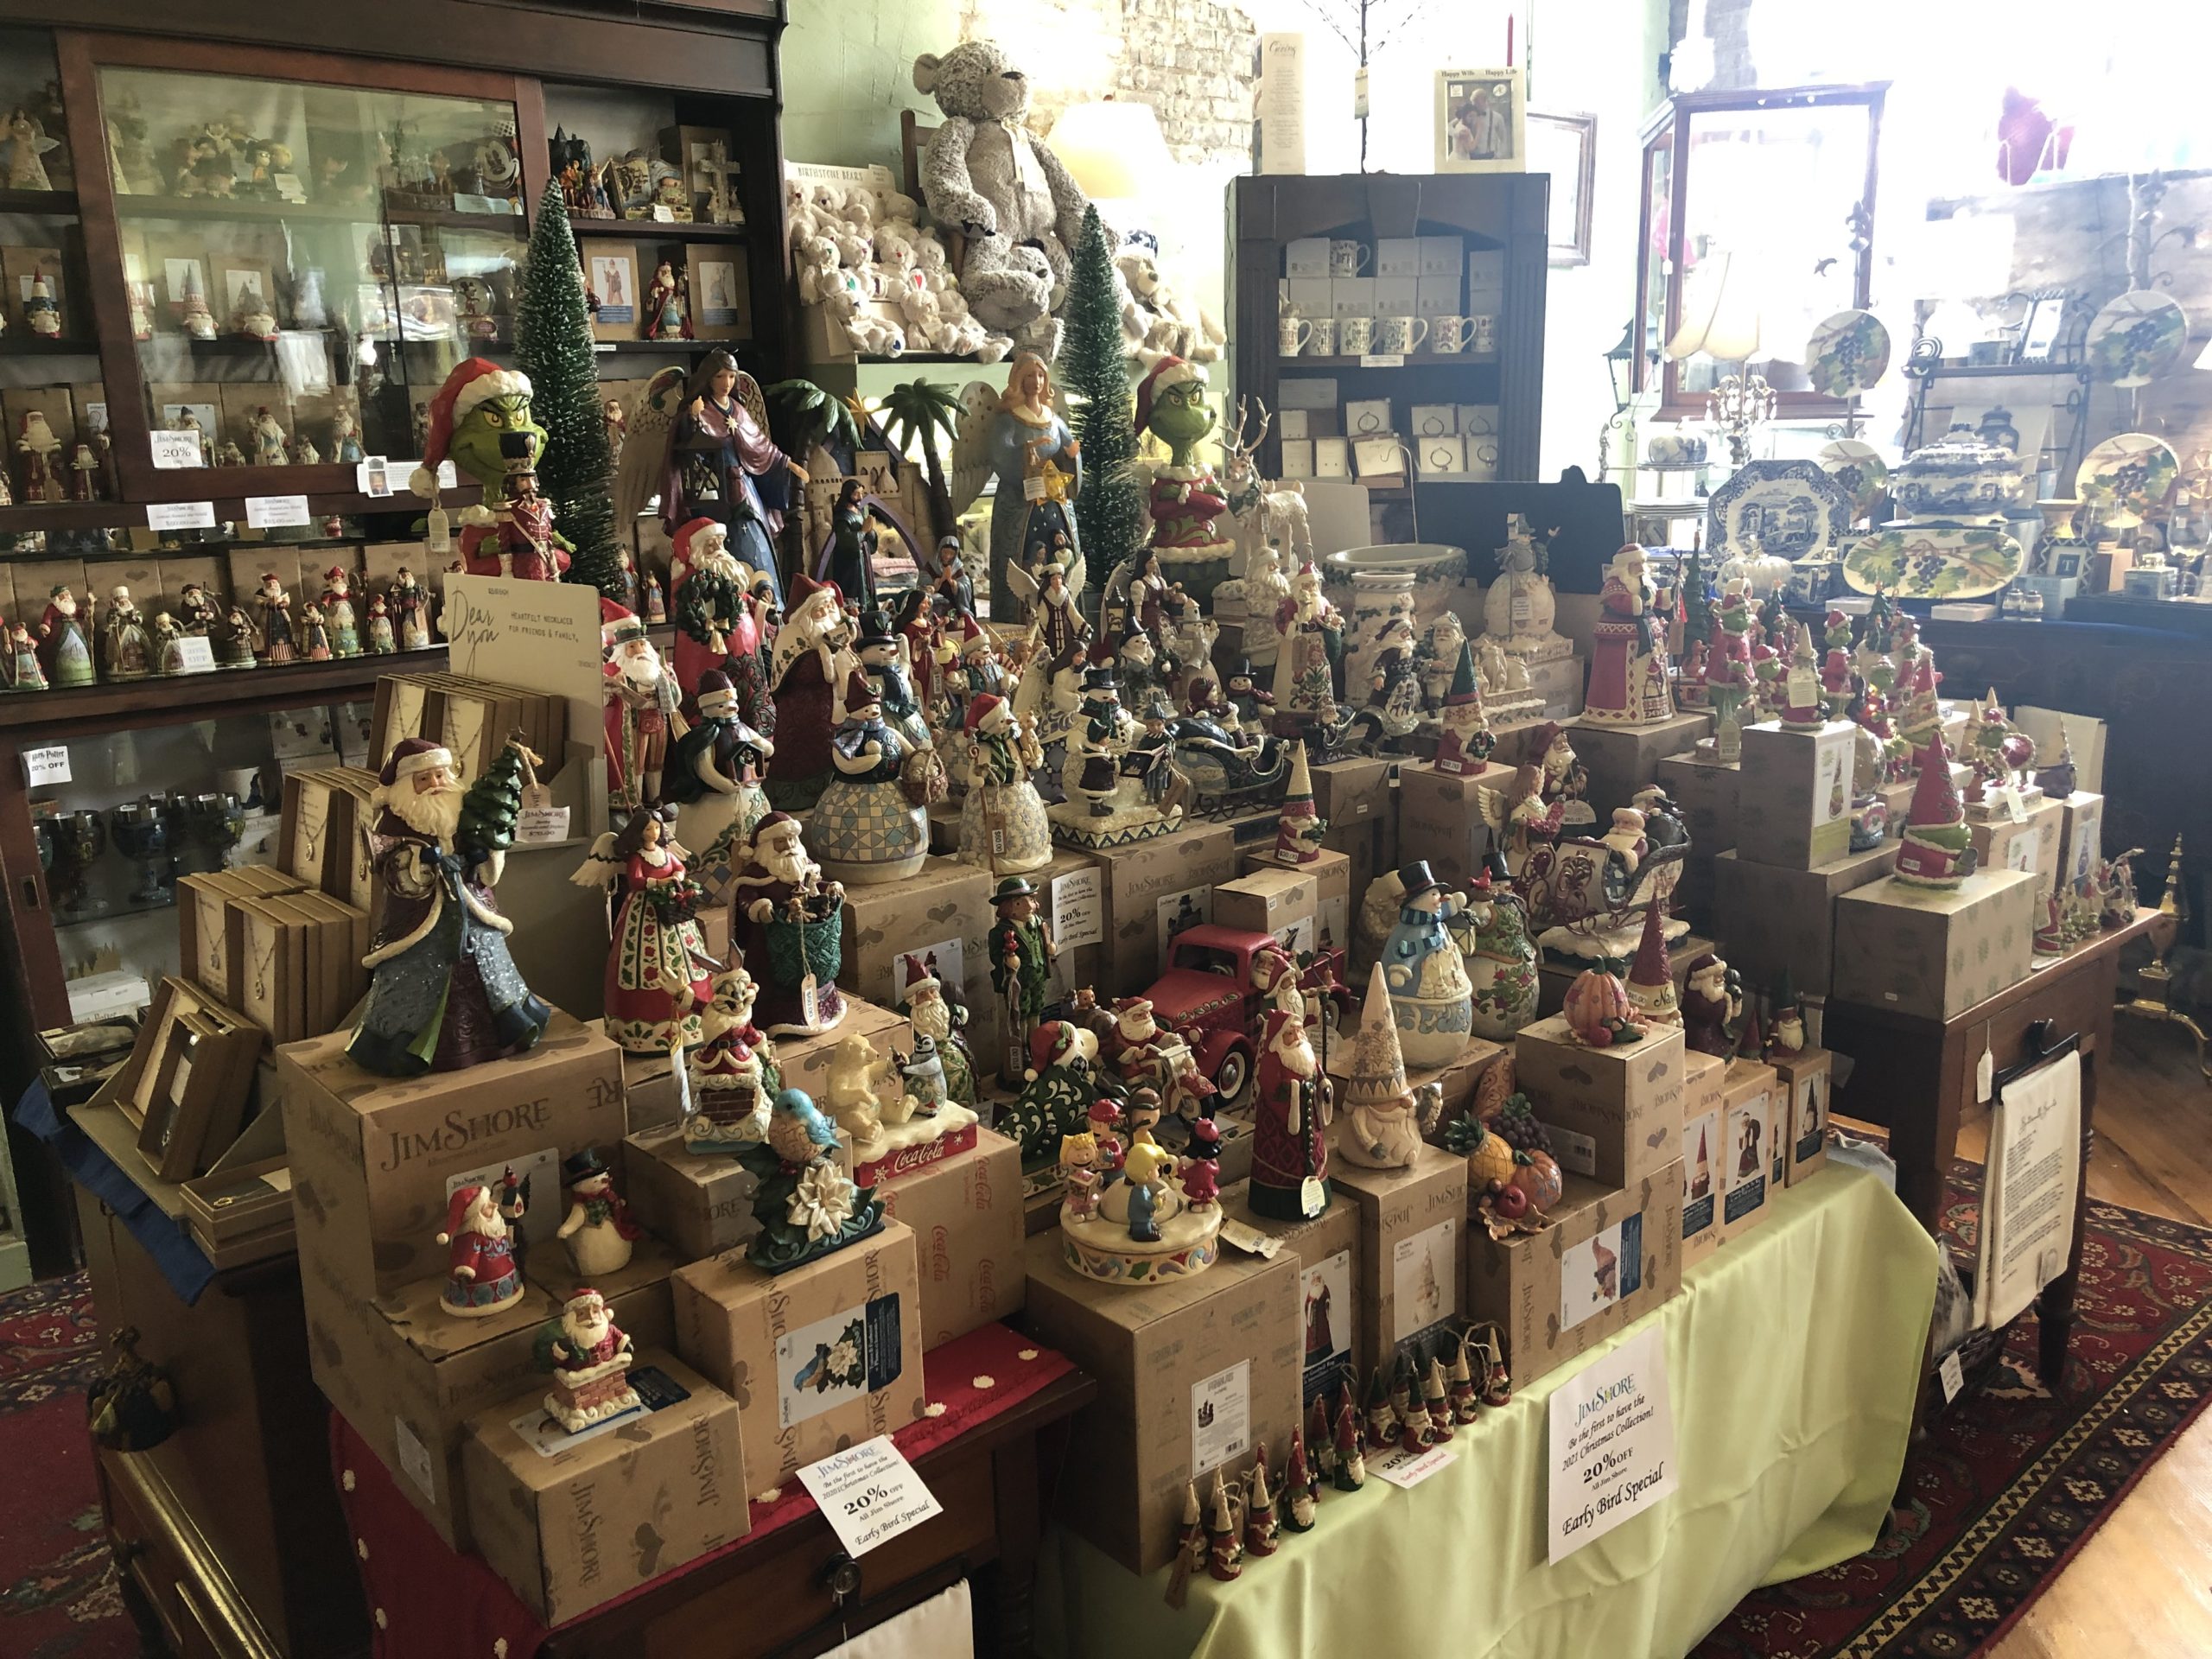 Jim Shore & Disney Traditions Figurines & Ornaments